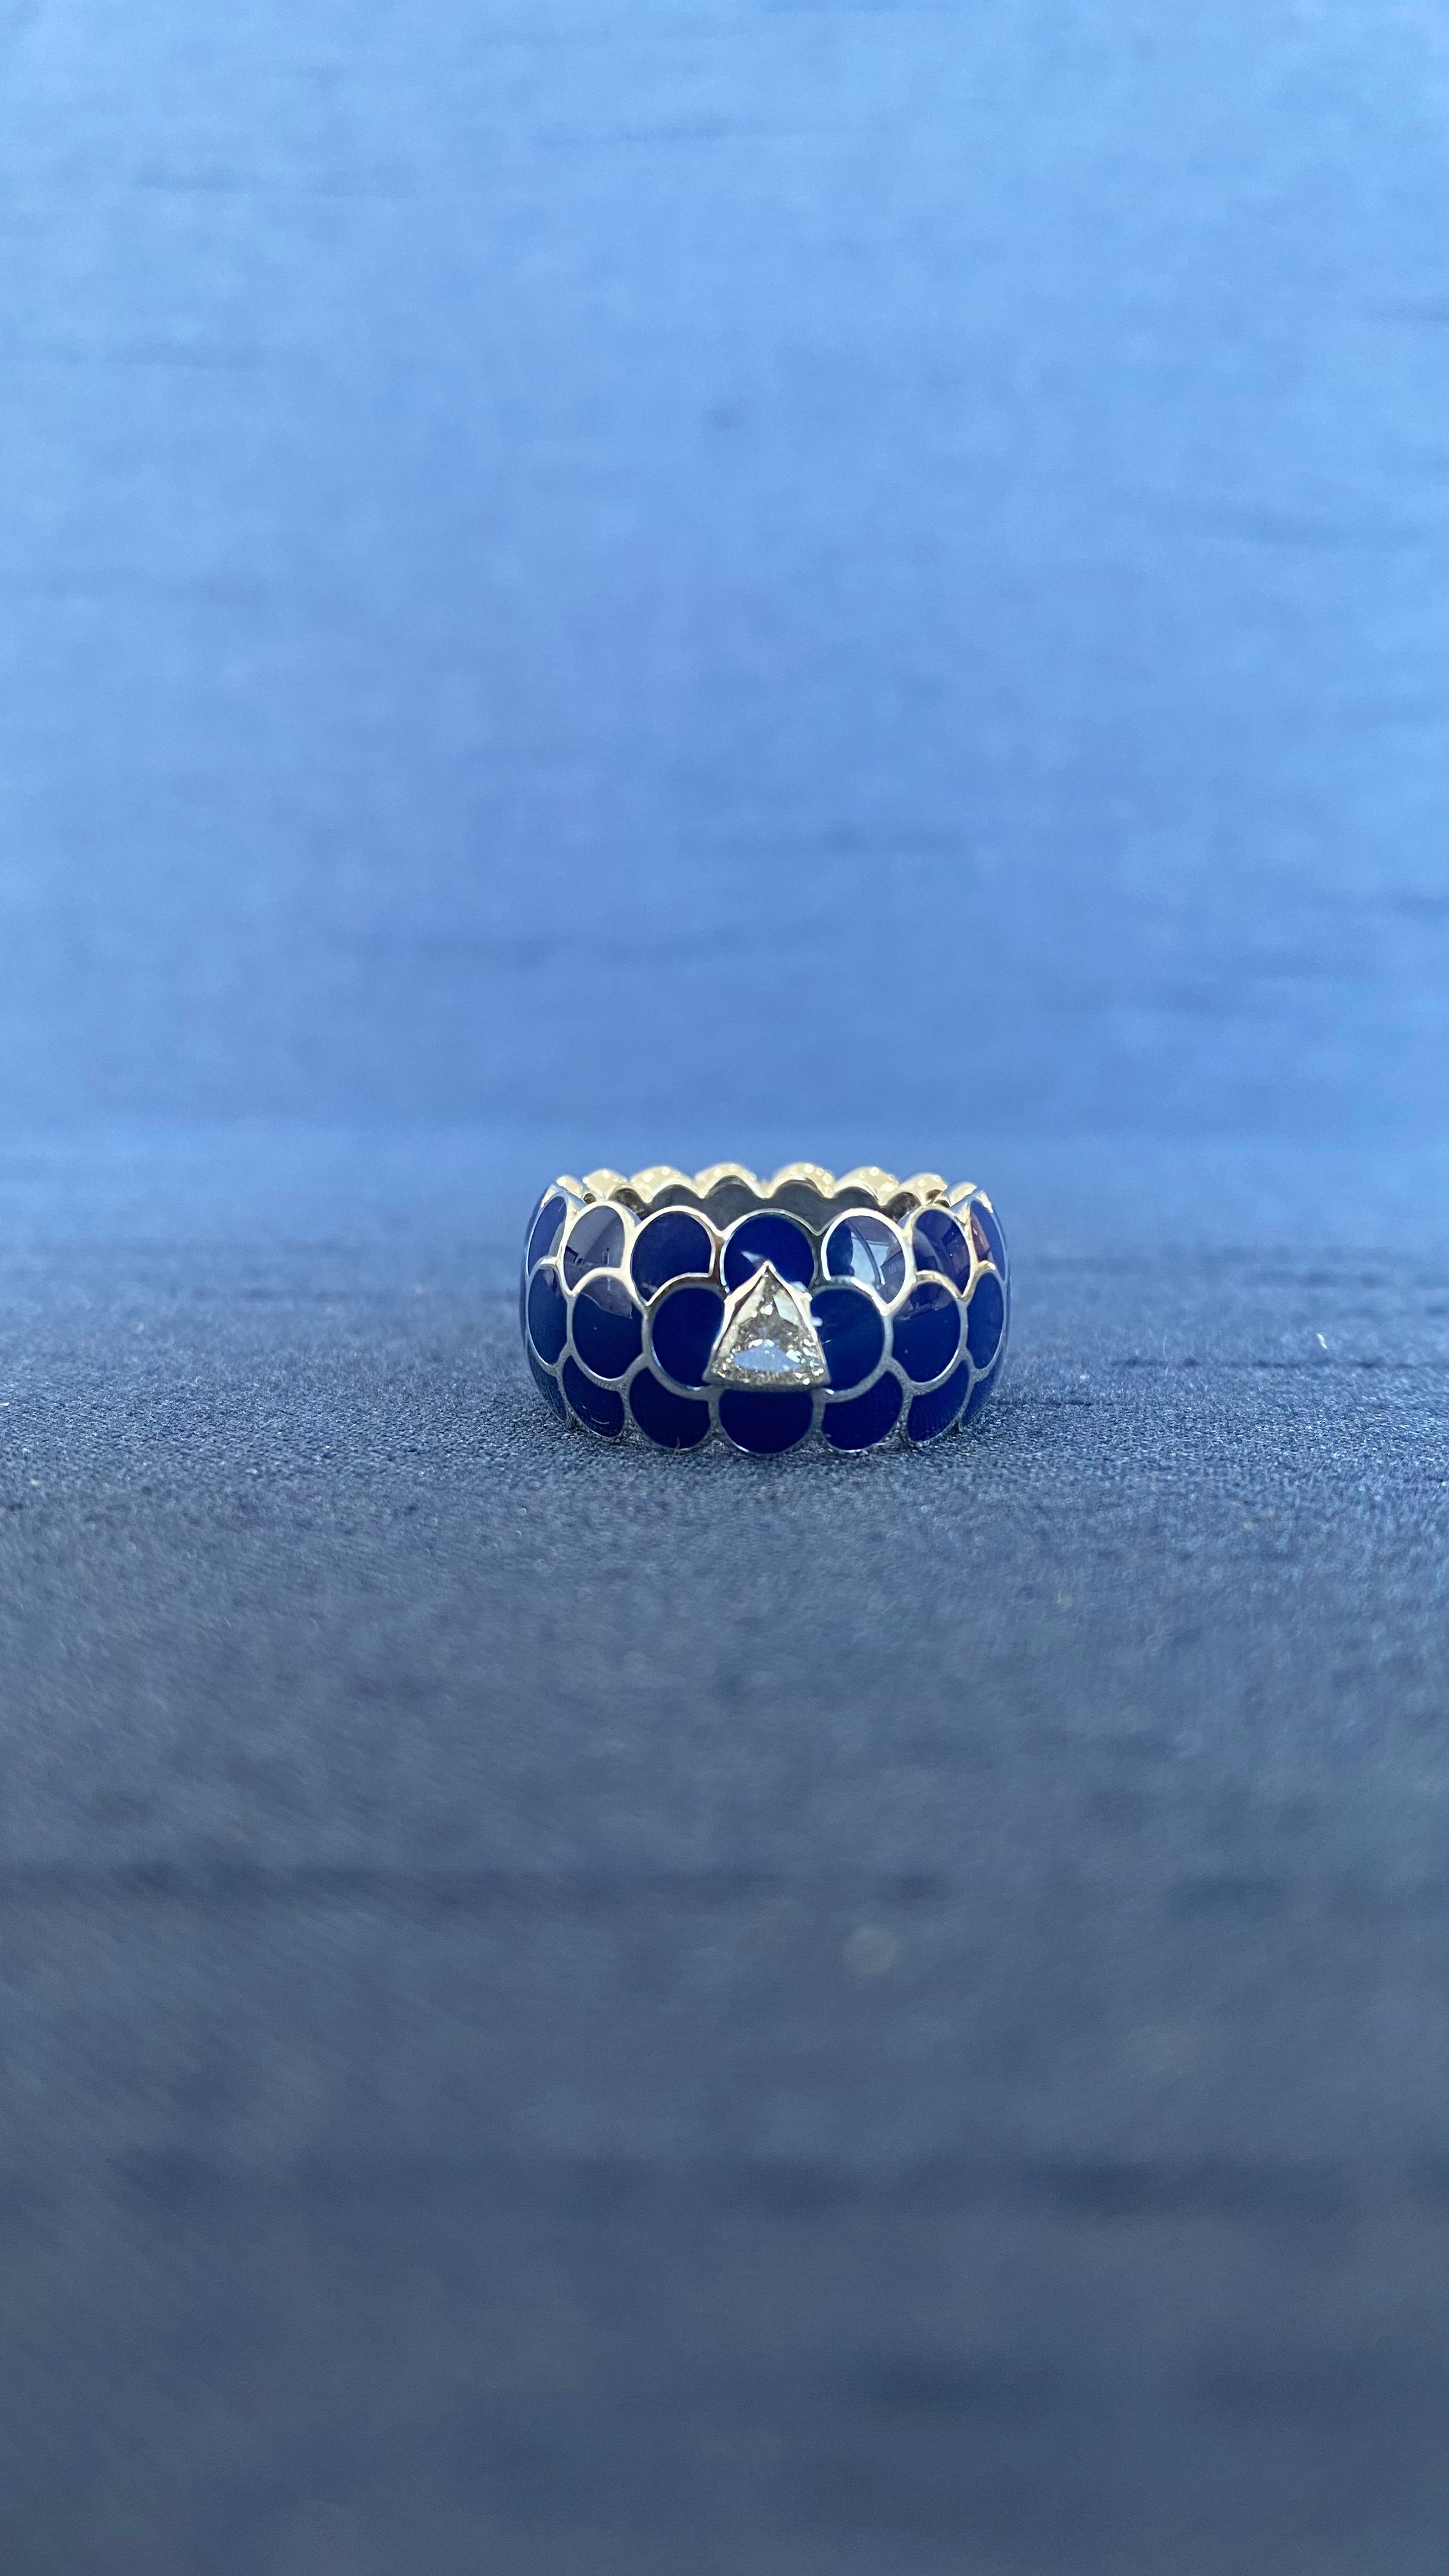 Design Enamel Rings with Trillion Diamonds